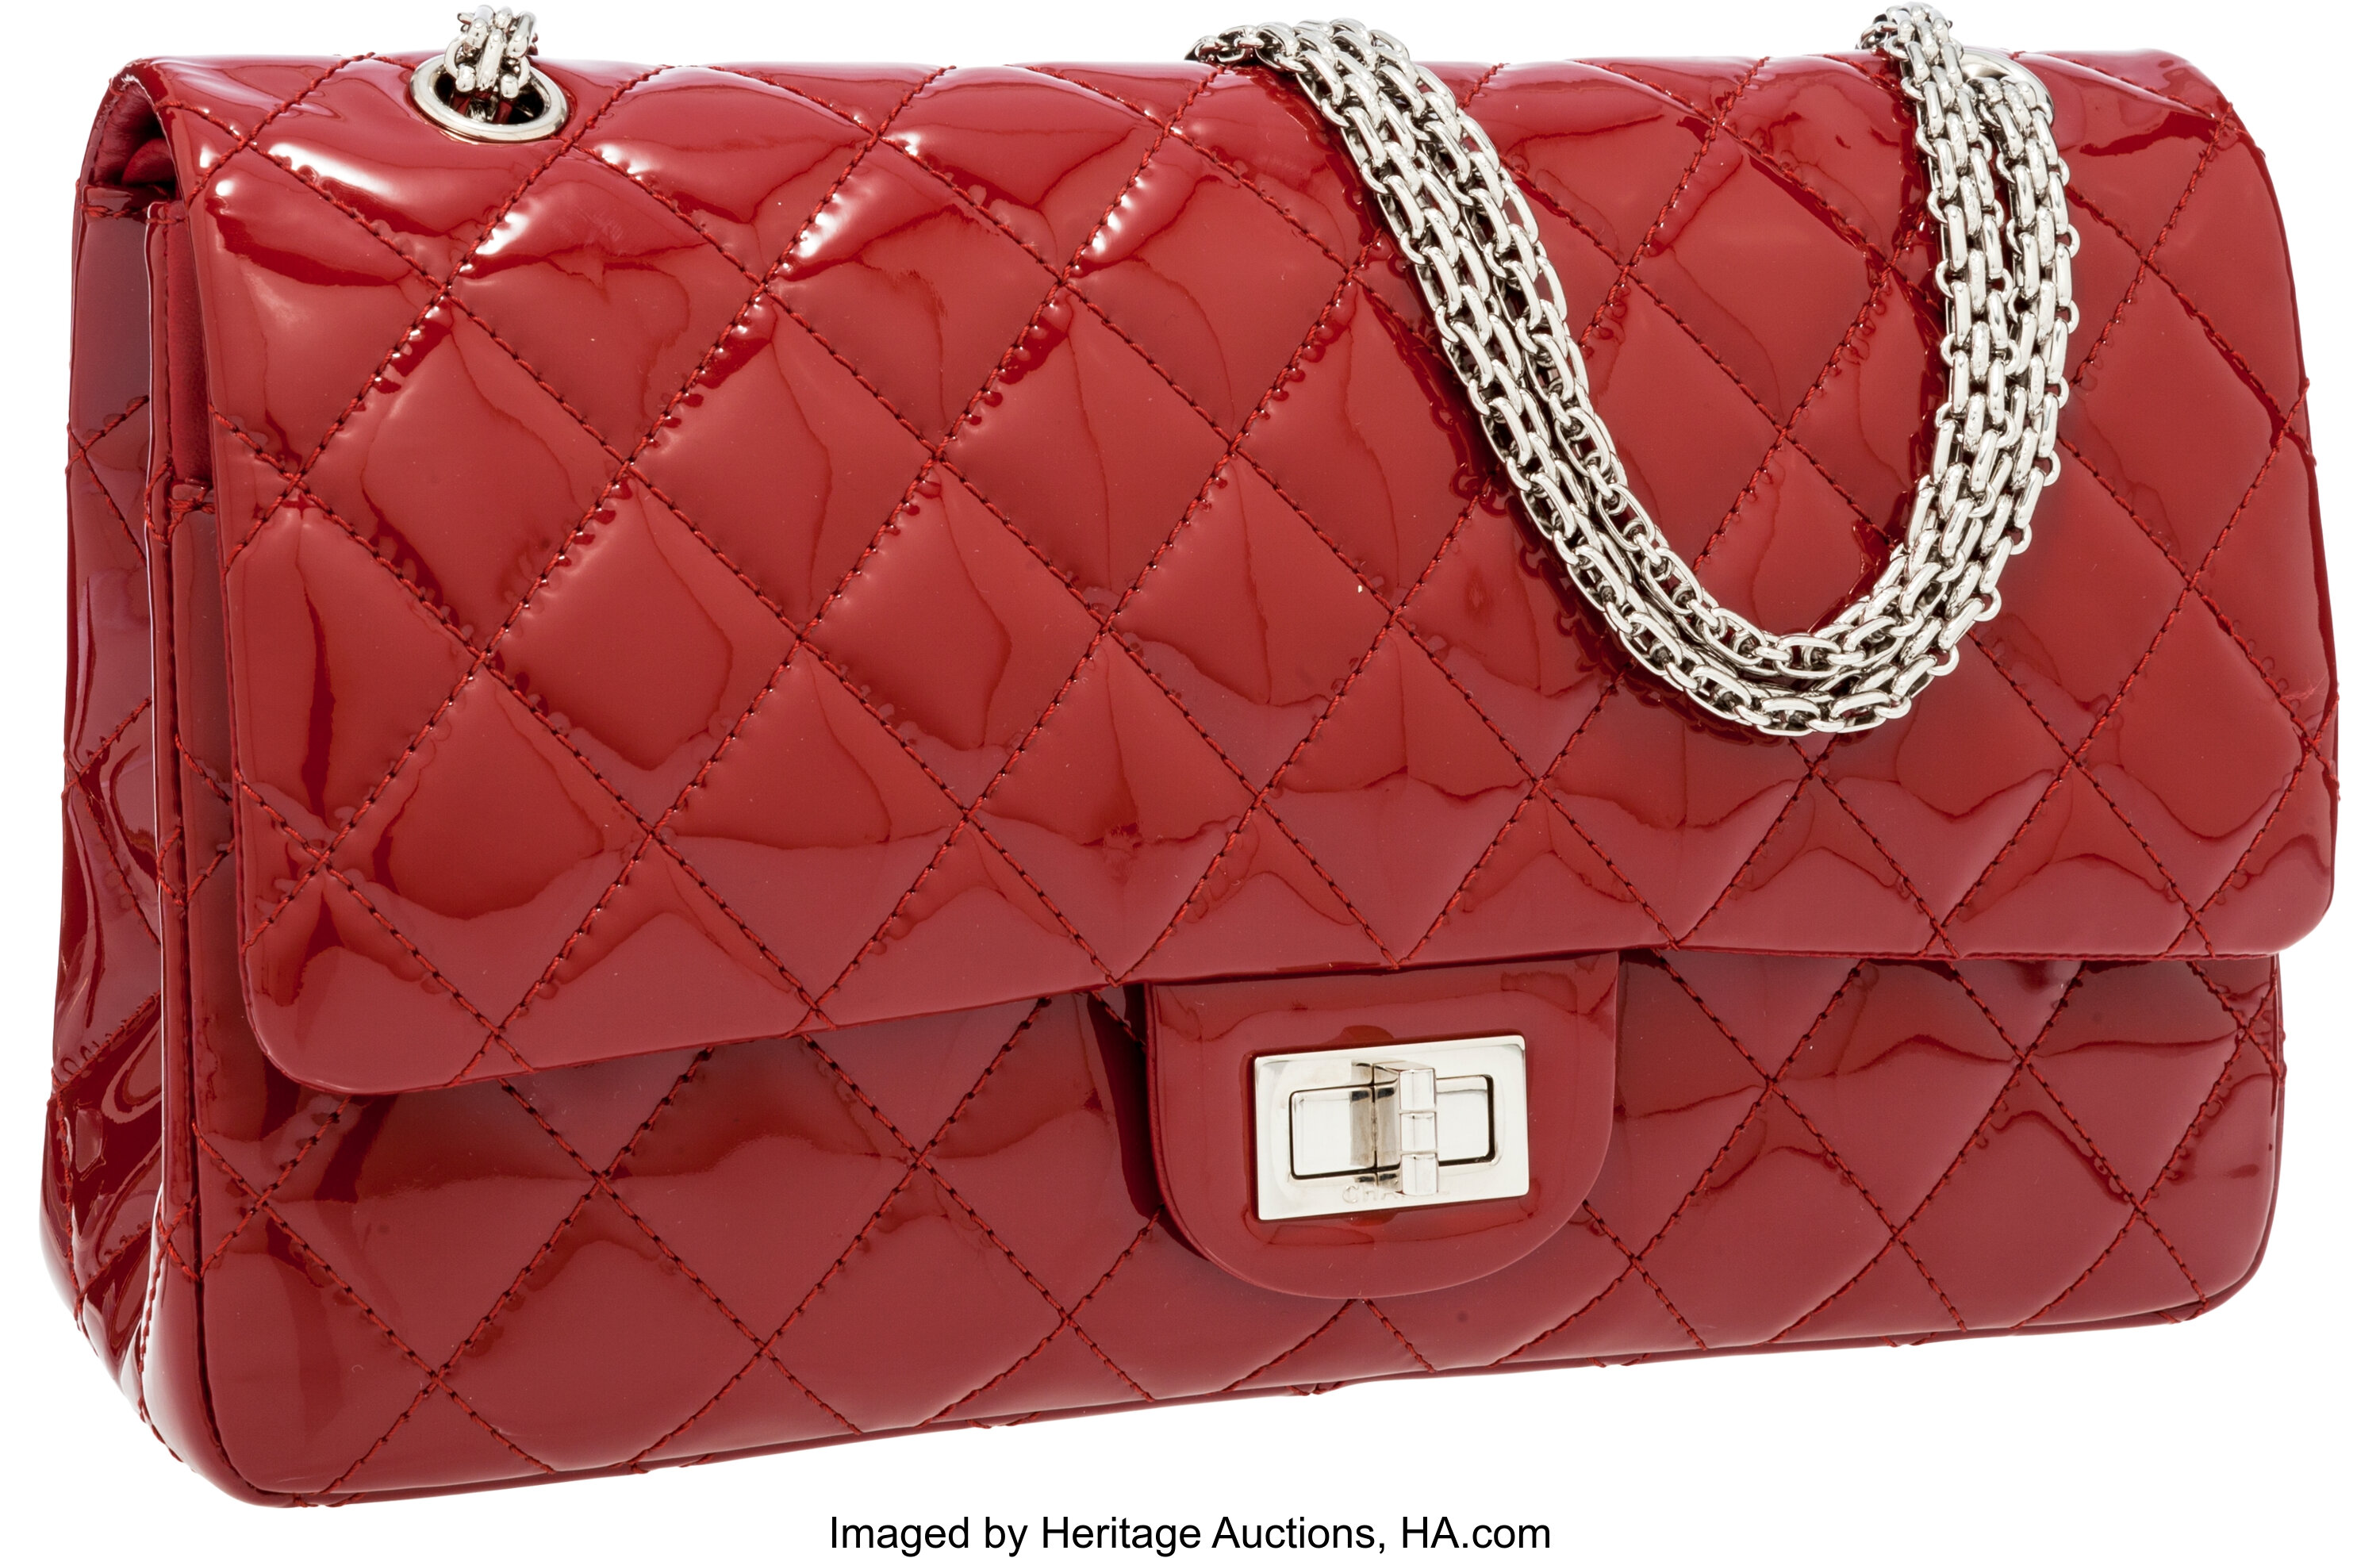 Sold at Auction: CHANEL Caviar Leather Maxi Classic Handbag W Box